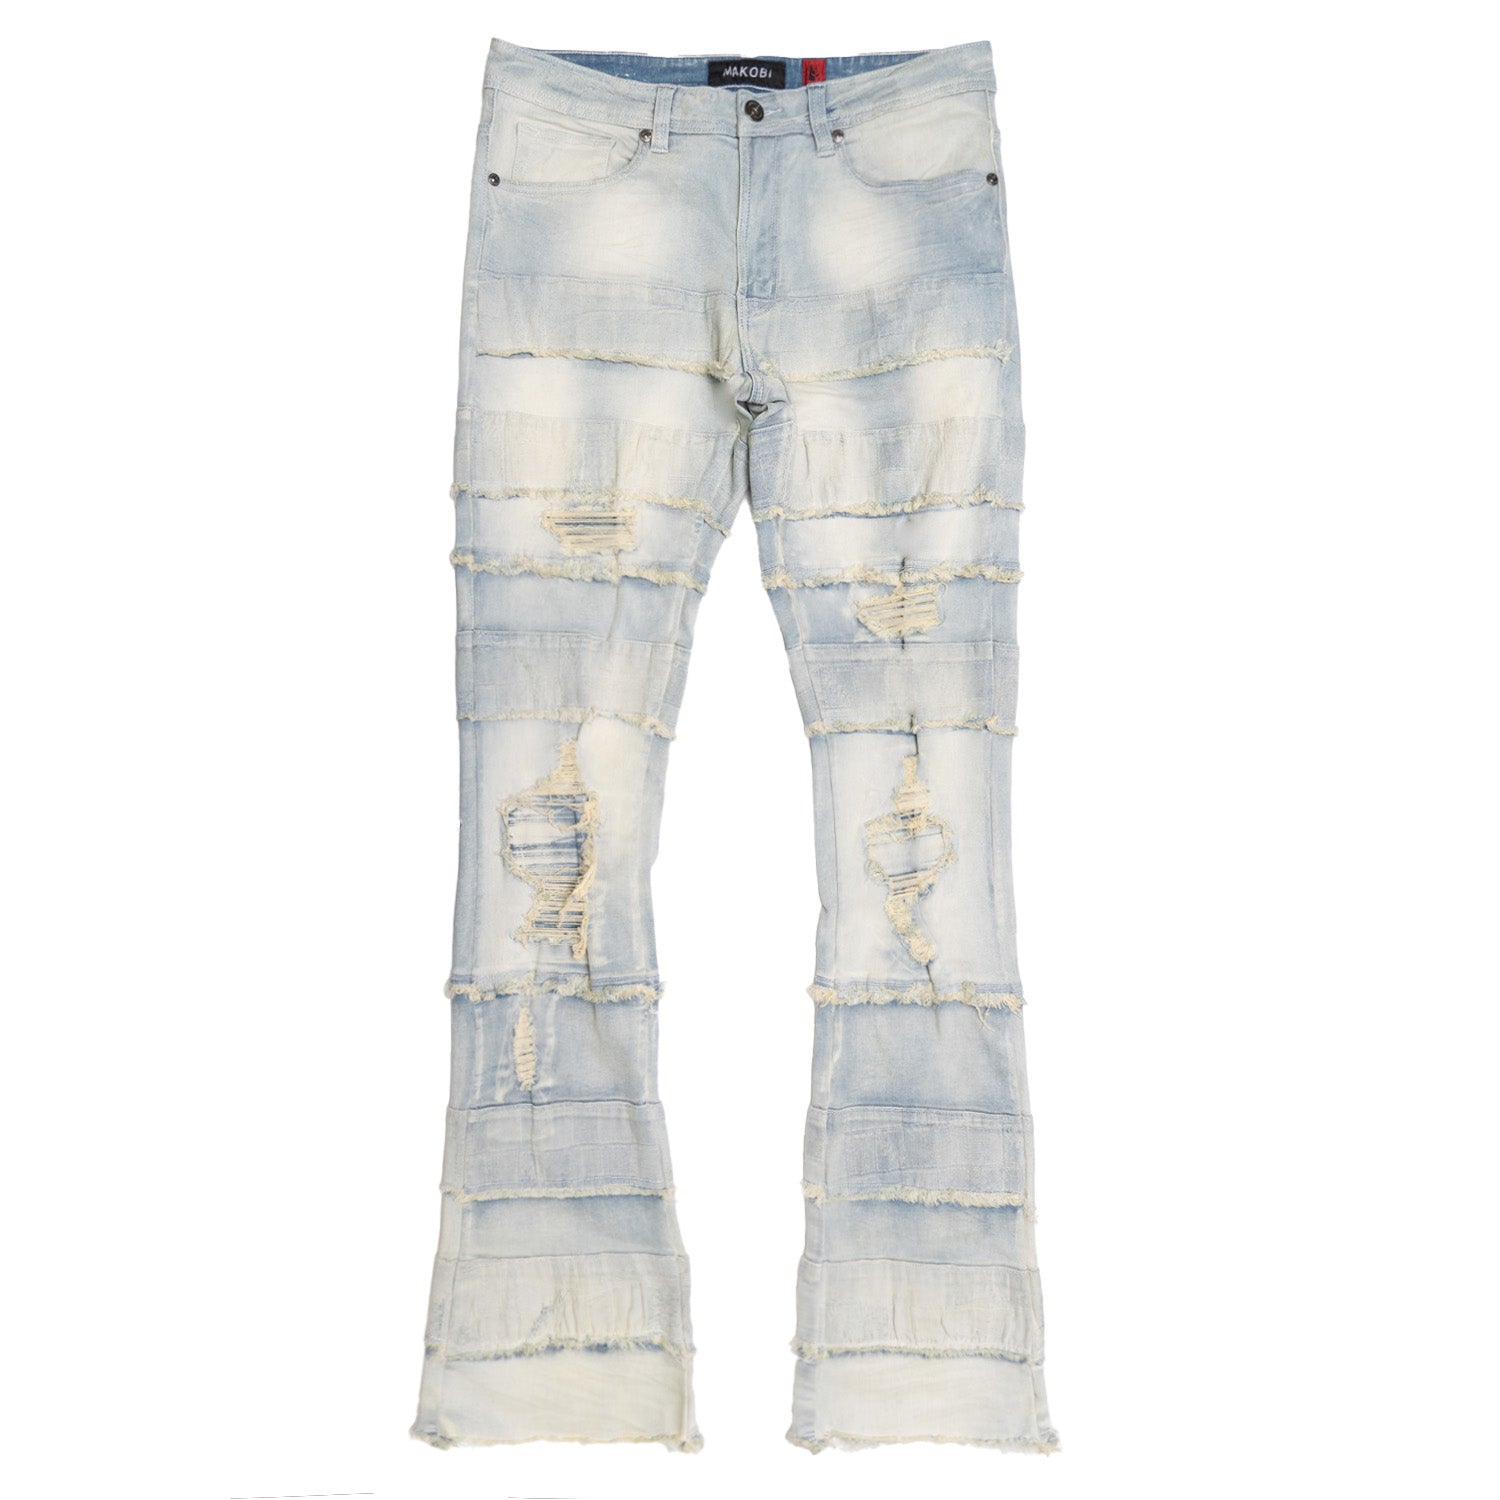 M1951 Bianchi Stacked Jeans - Light Wash – Makobi Jeans USA